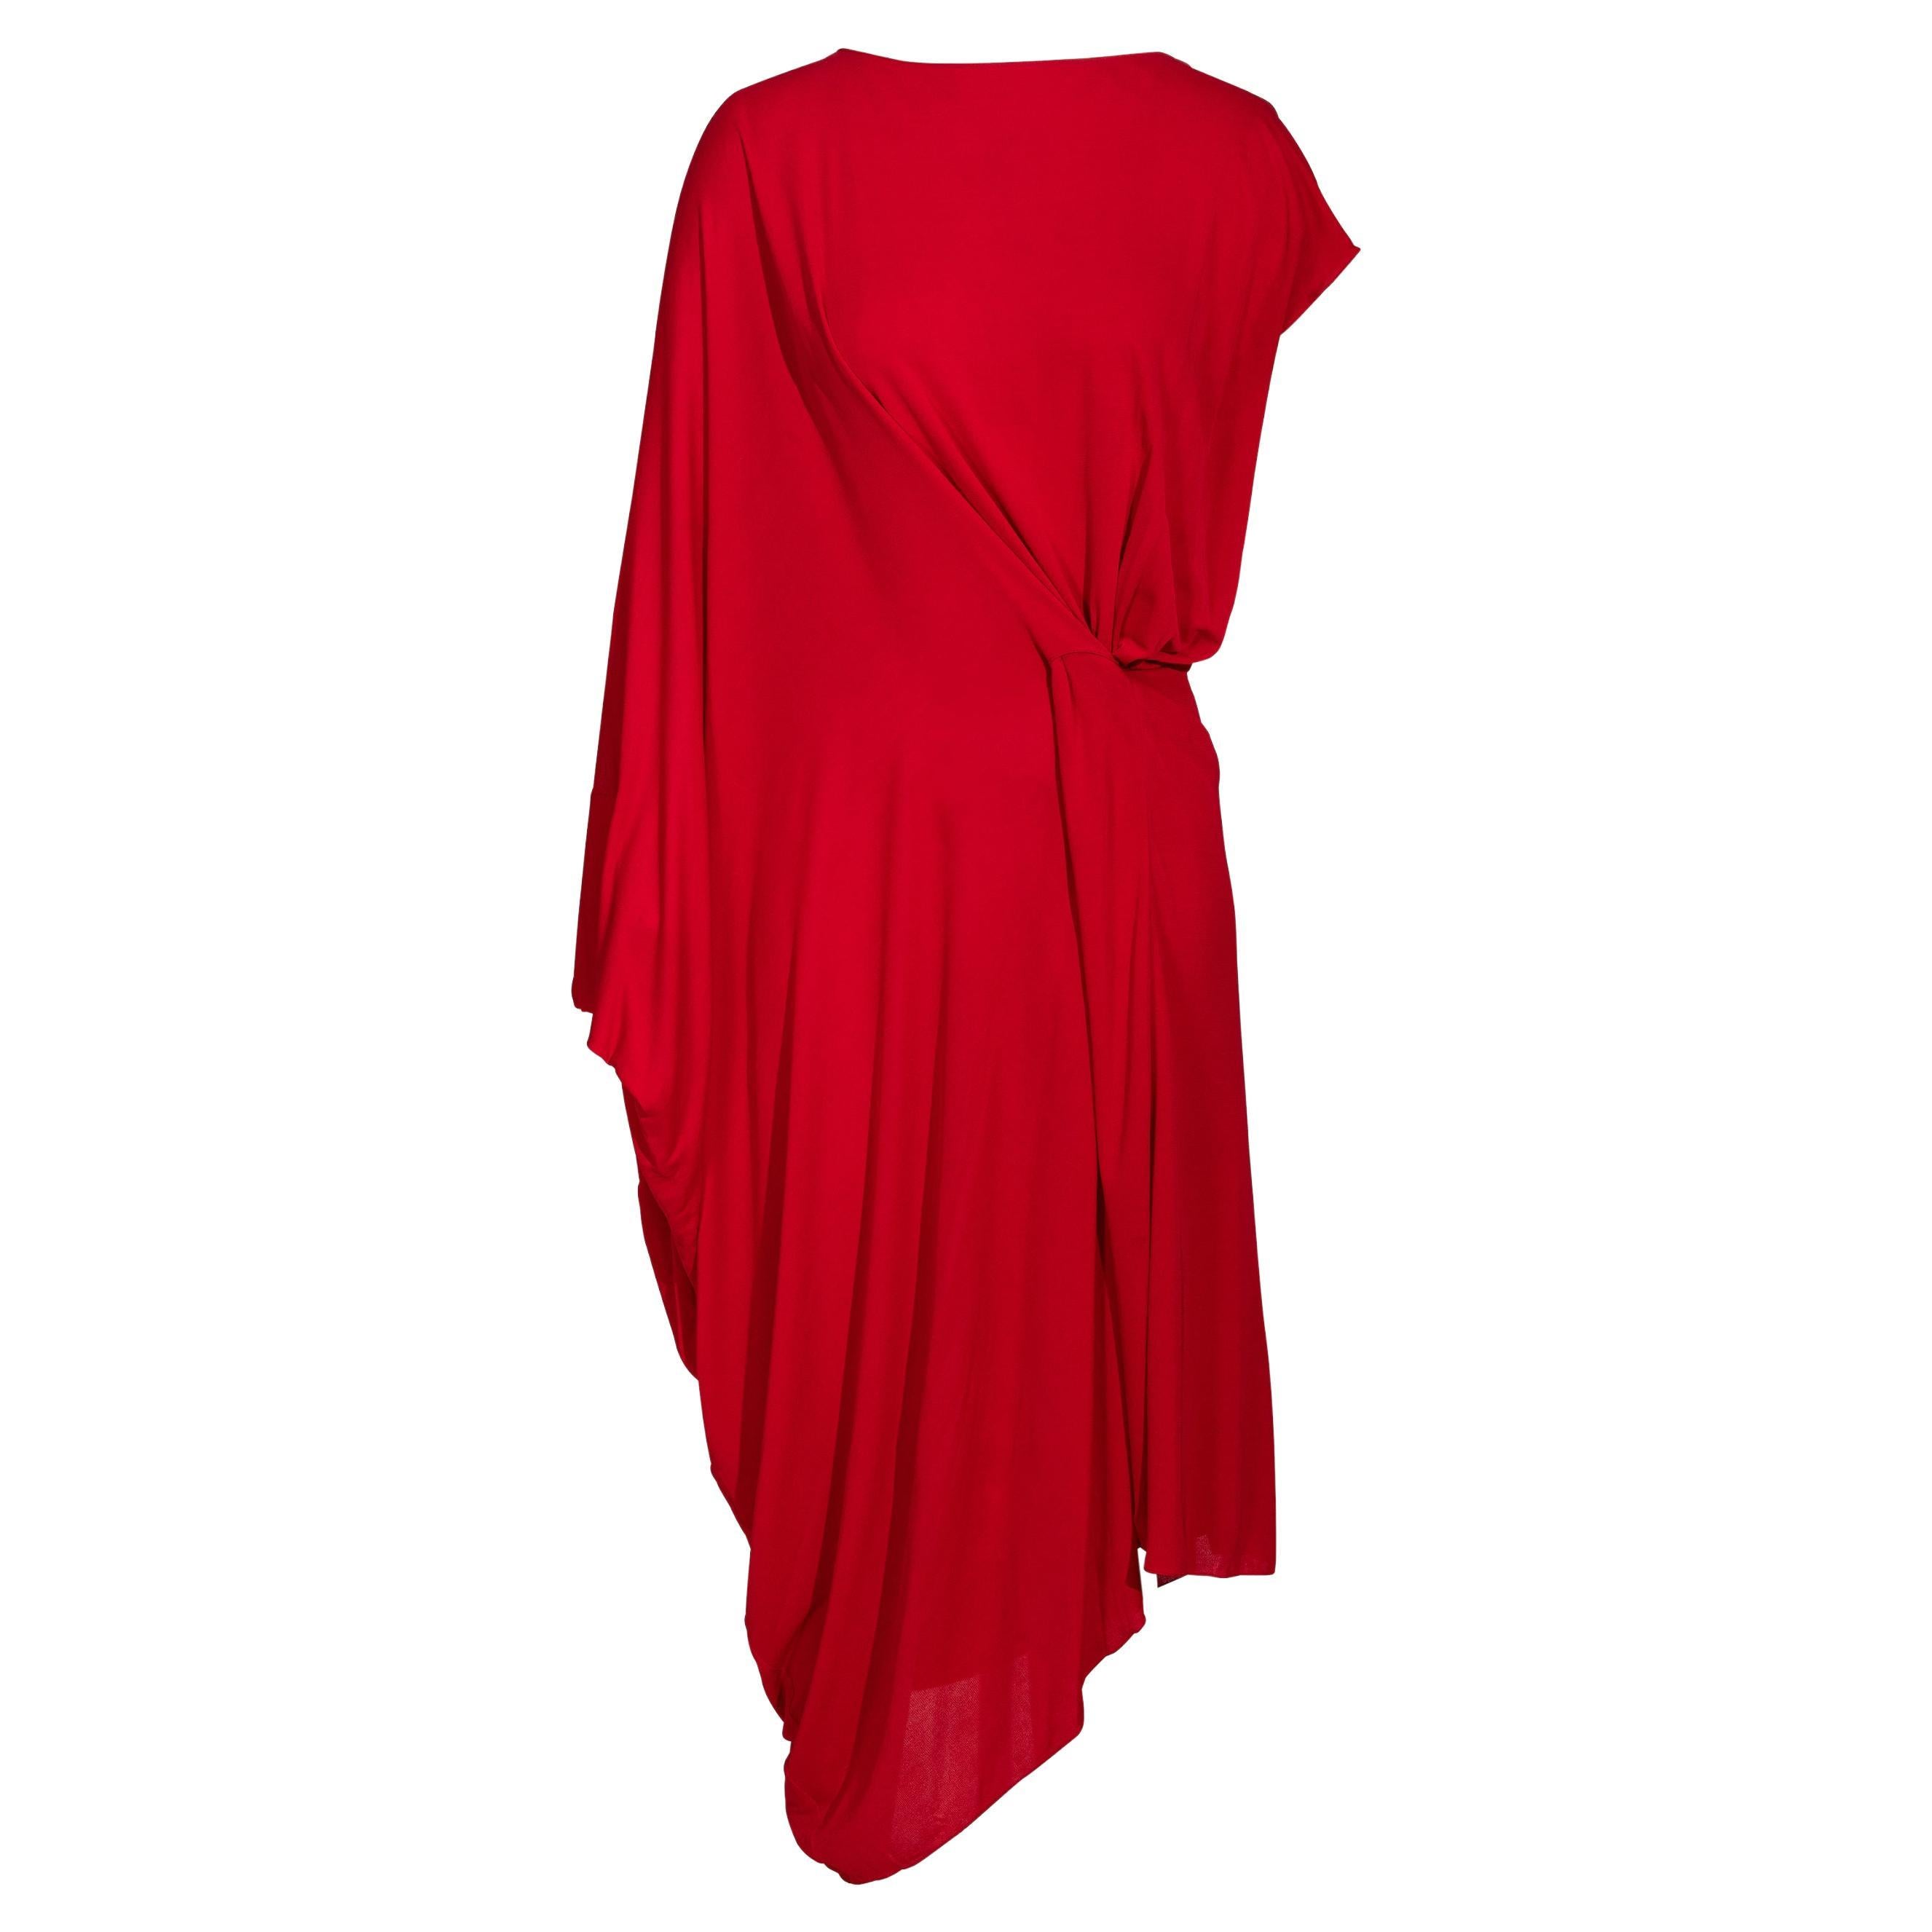 S/S 2009 Maison Martin Margiela Red Jersey Asymmetrical Drape Dress